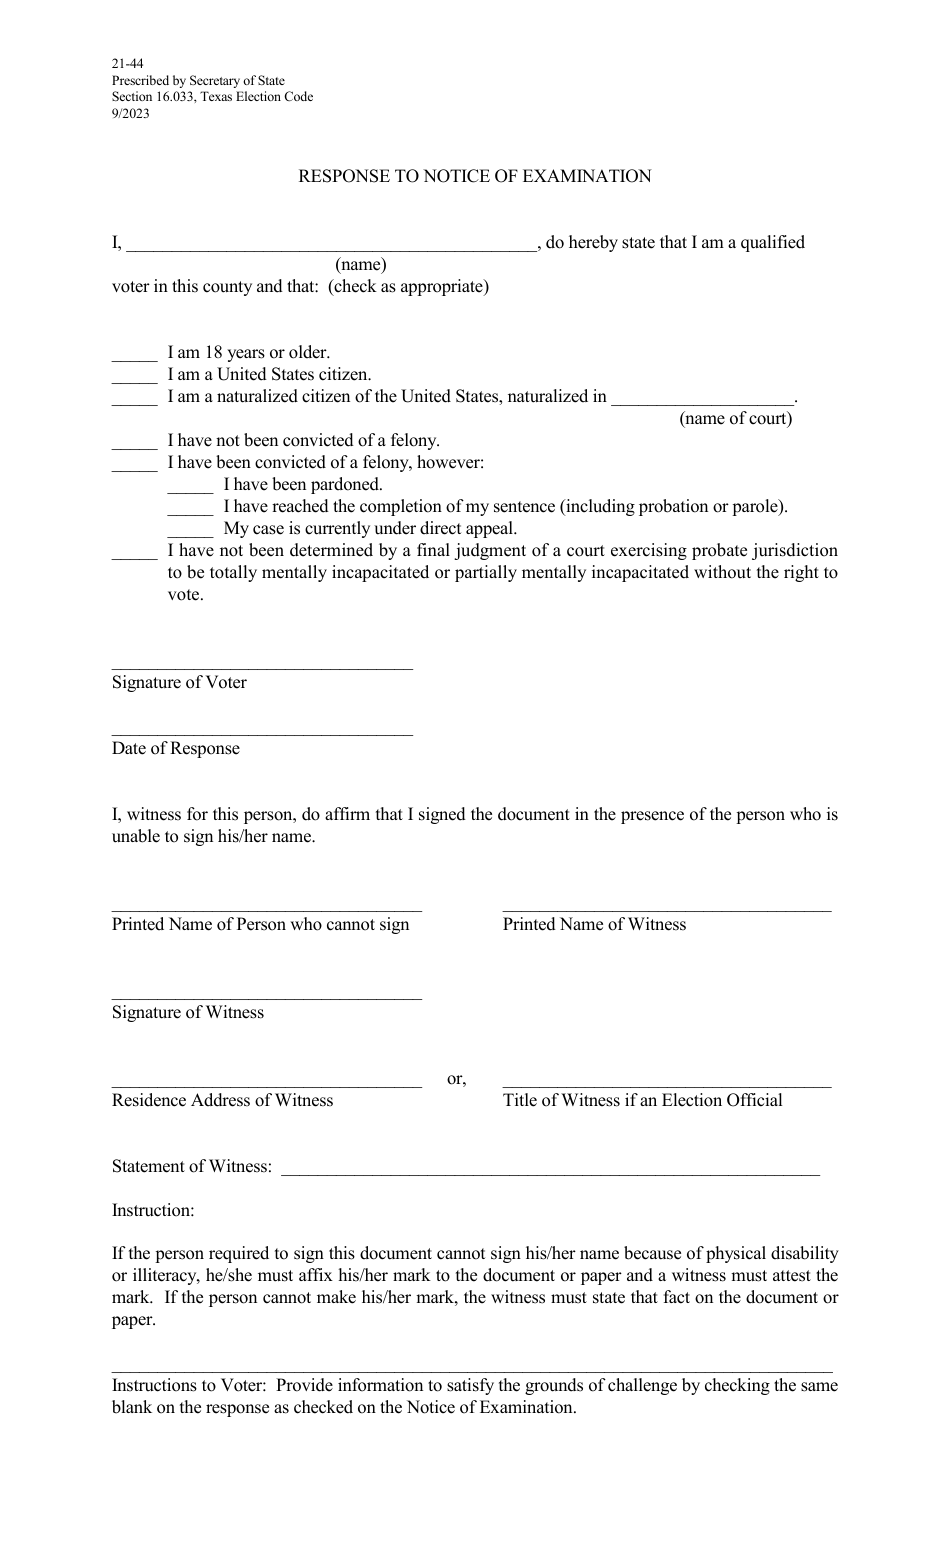 Form 21-44 Notice of Examination - Response Device - Texas (English / Spanish), Page 1